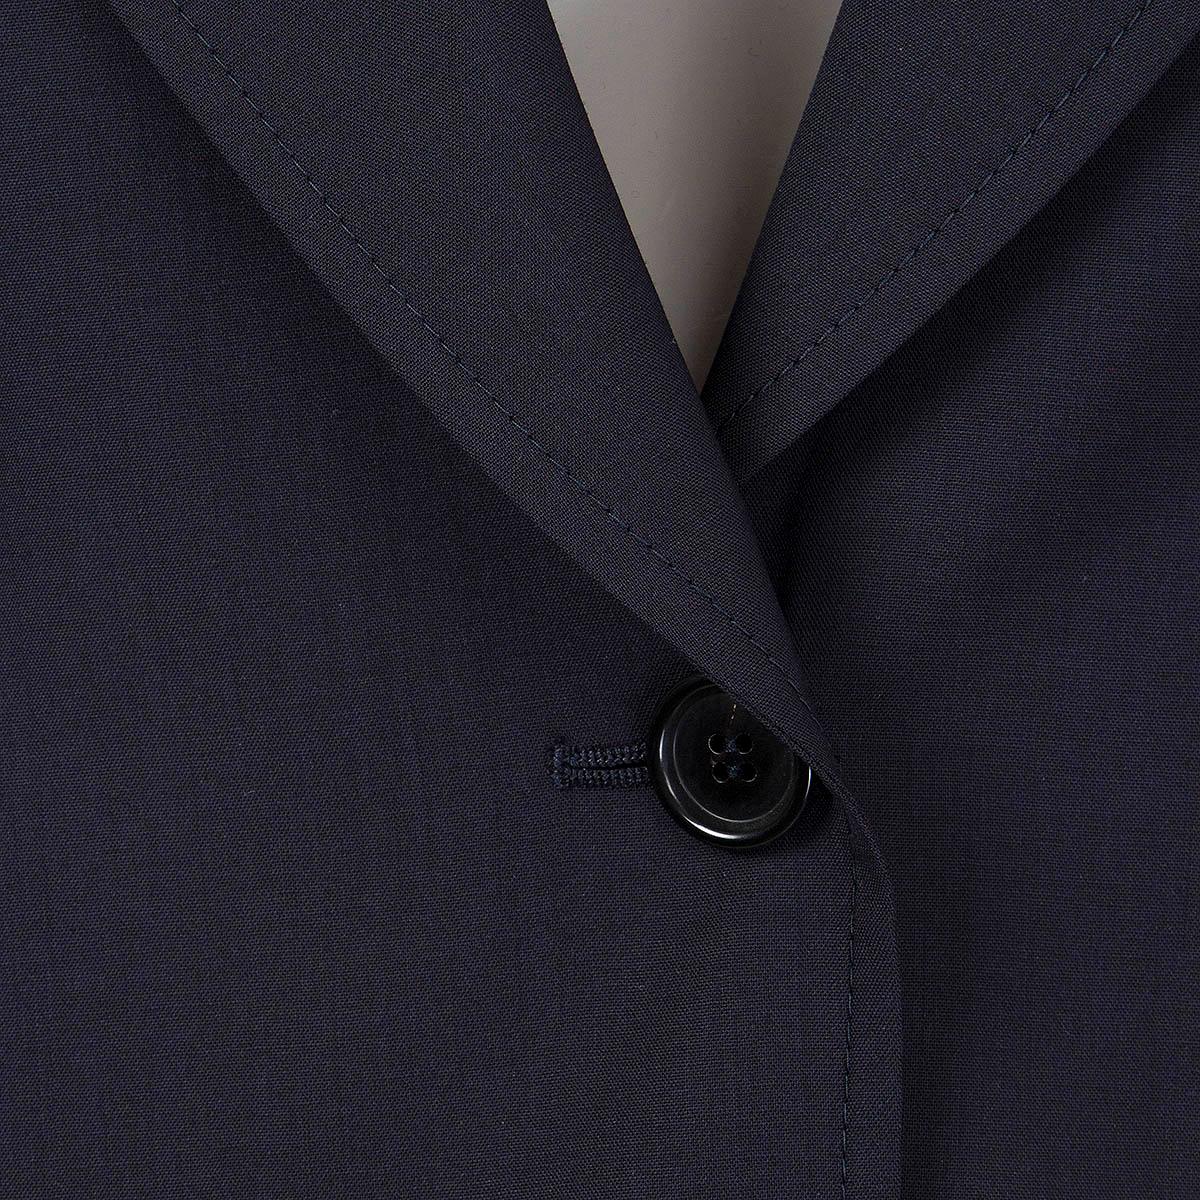 PRADA navy blue wool LIGHTWEIGHT Blazer Jacket 46 XL For Sale 1